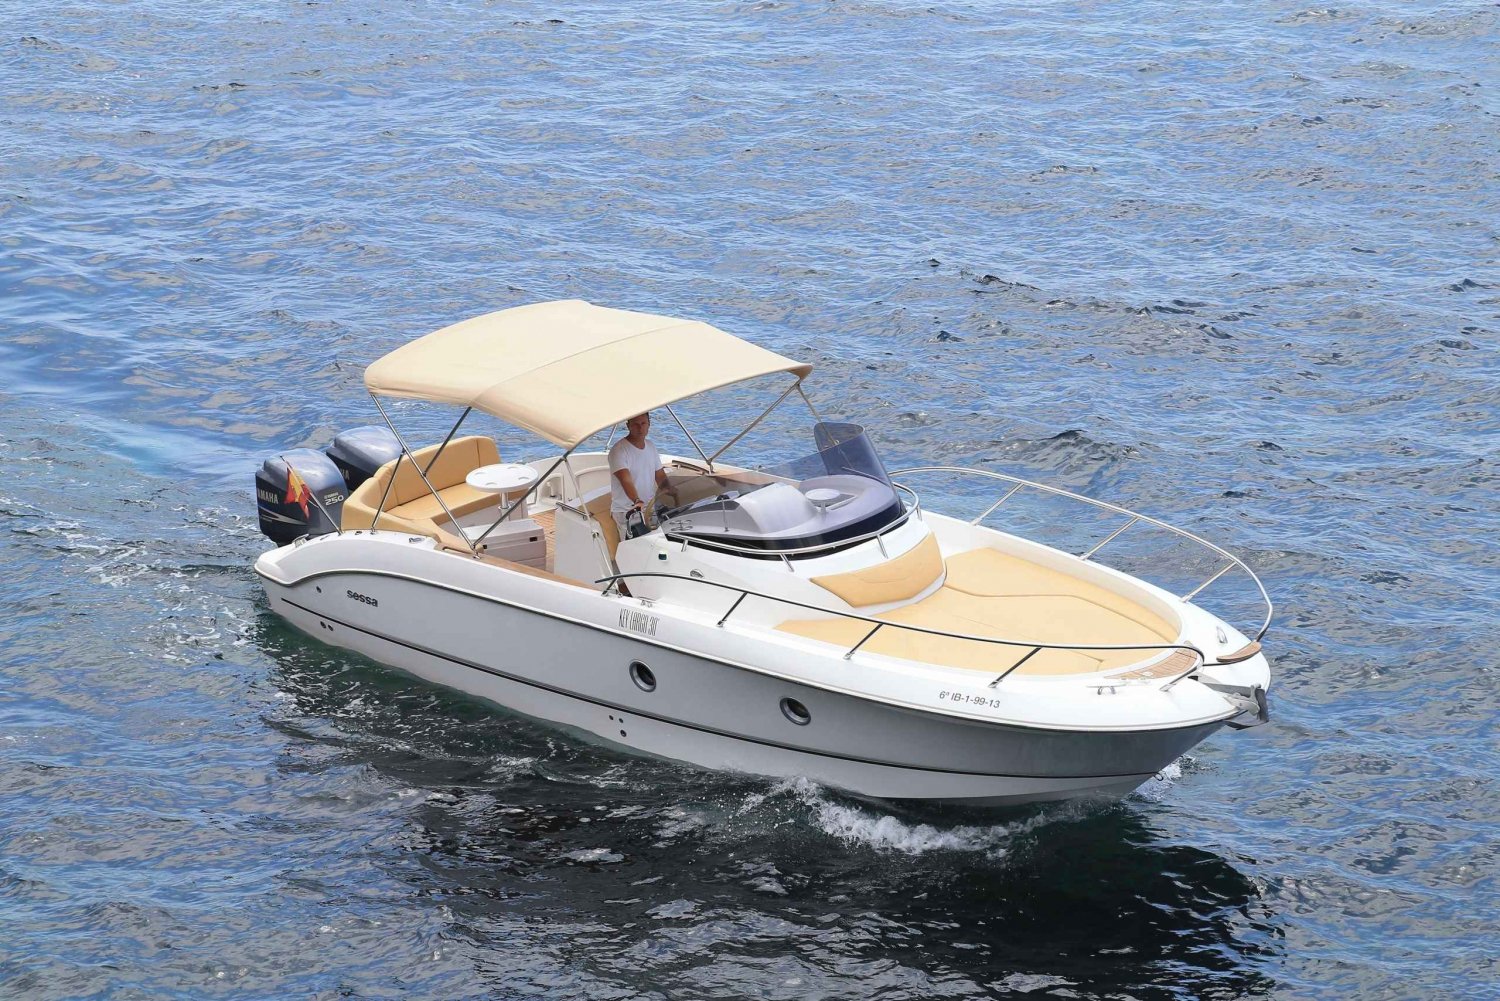 Ibiza: 9-persoons privé boot huren, Formentera & highlights